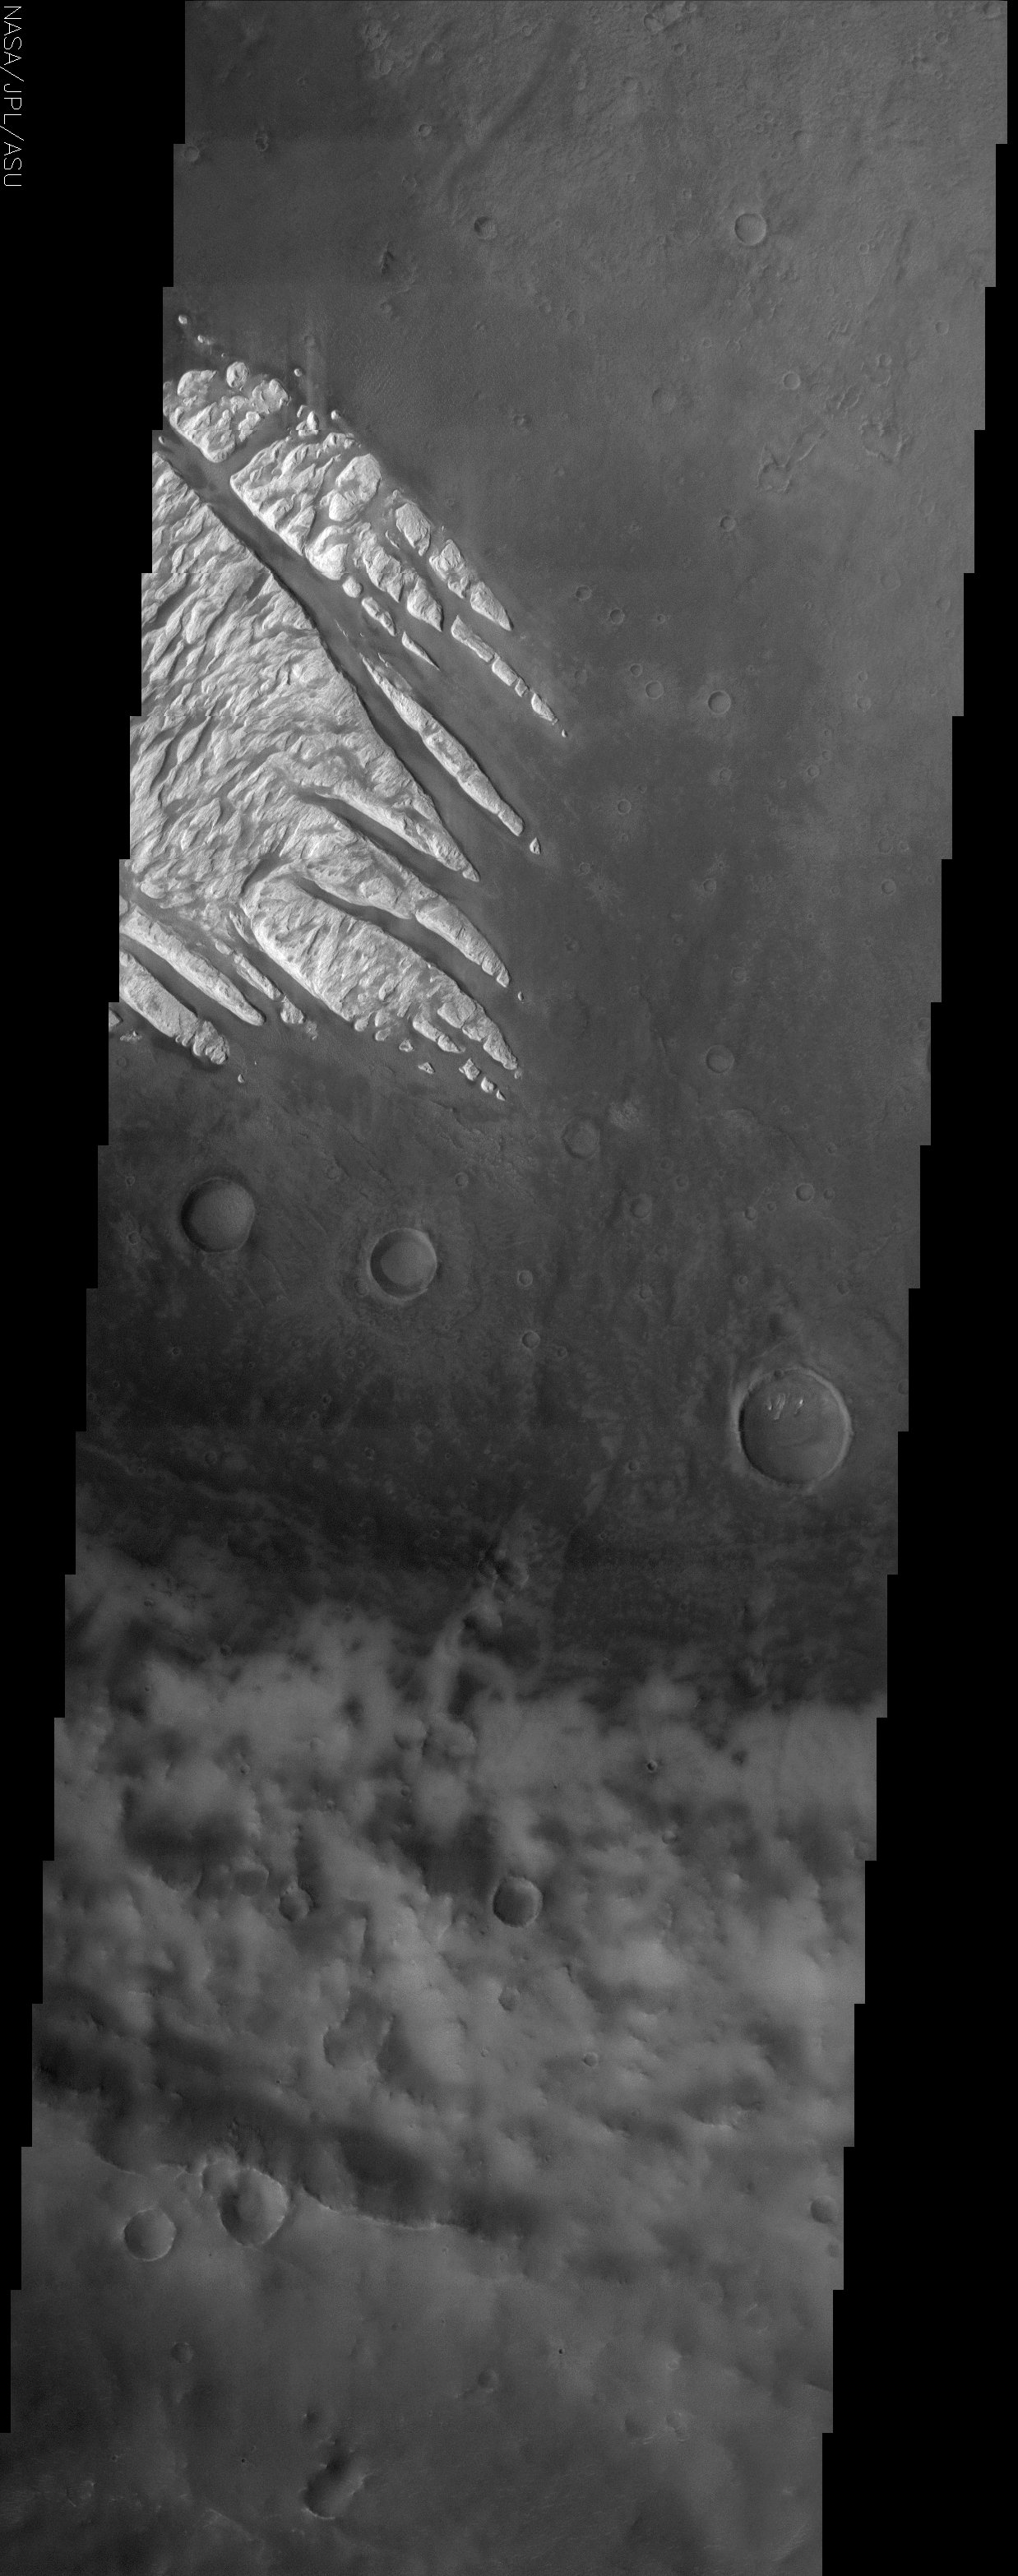 Belye kamennye pal'cy na Marse